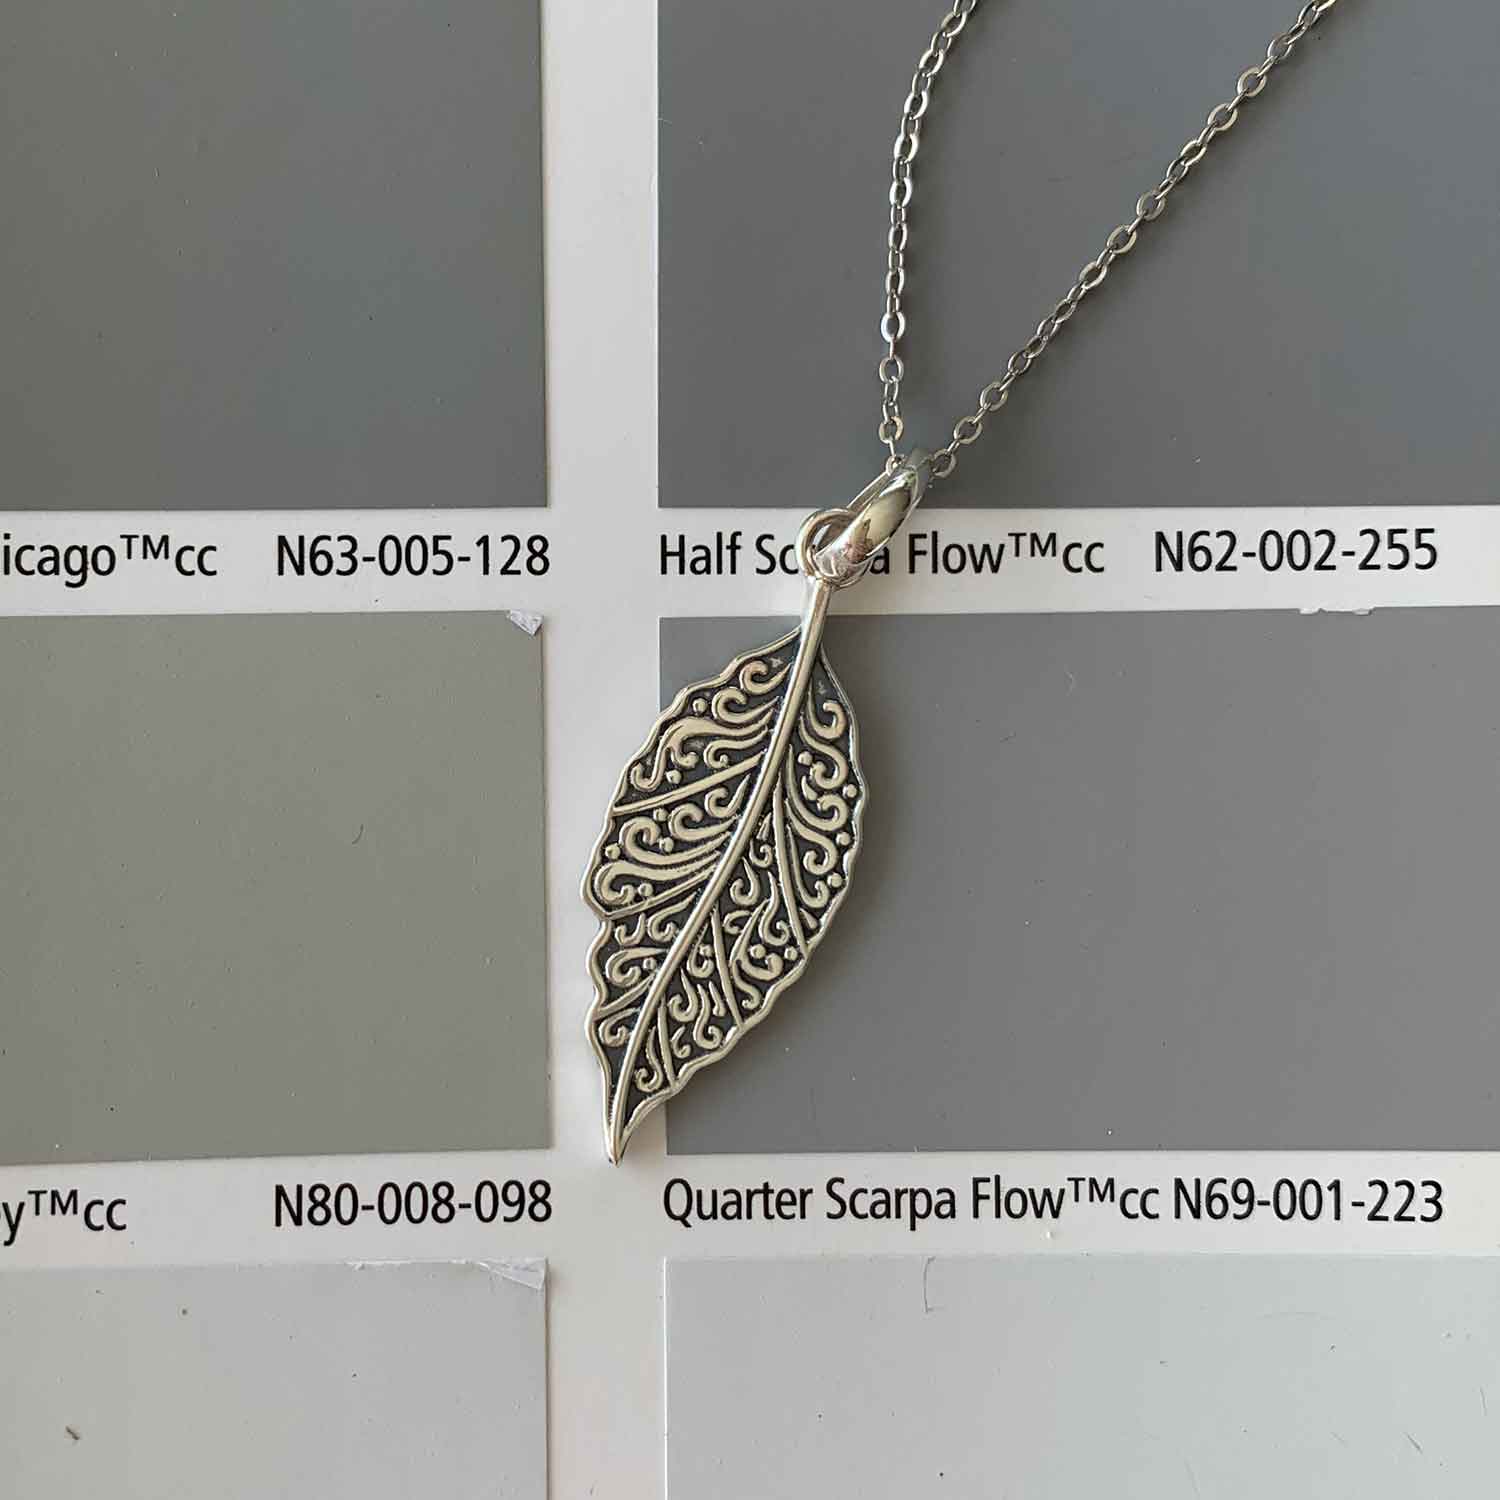 leaf koru silver pendant necklace